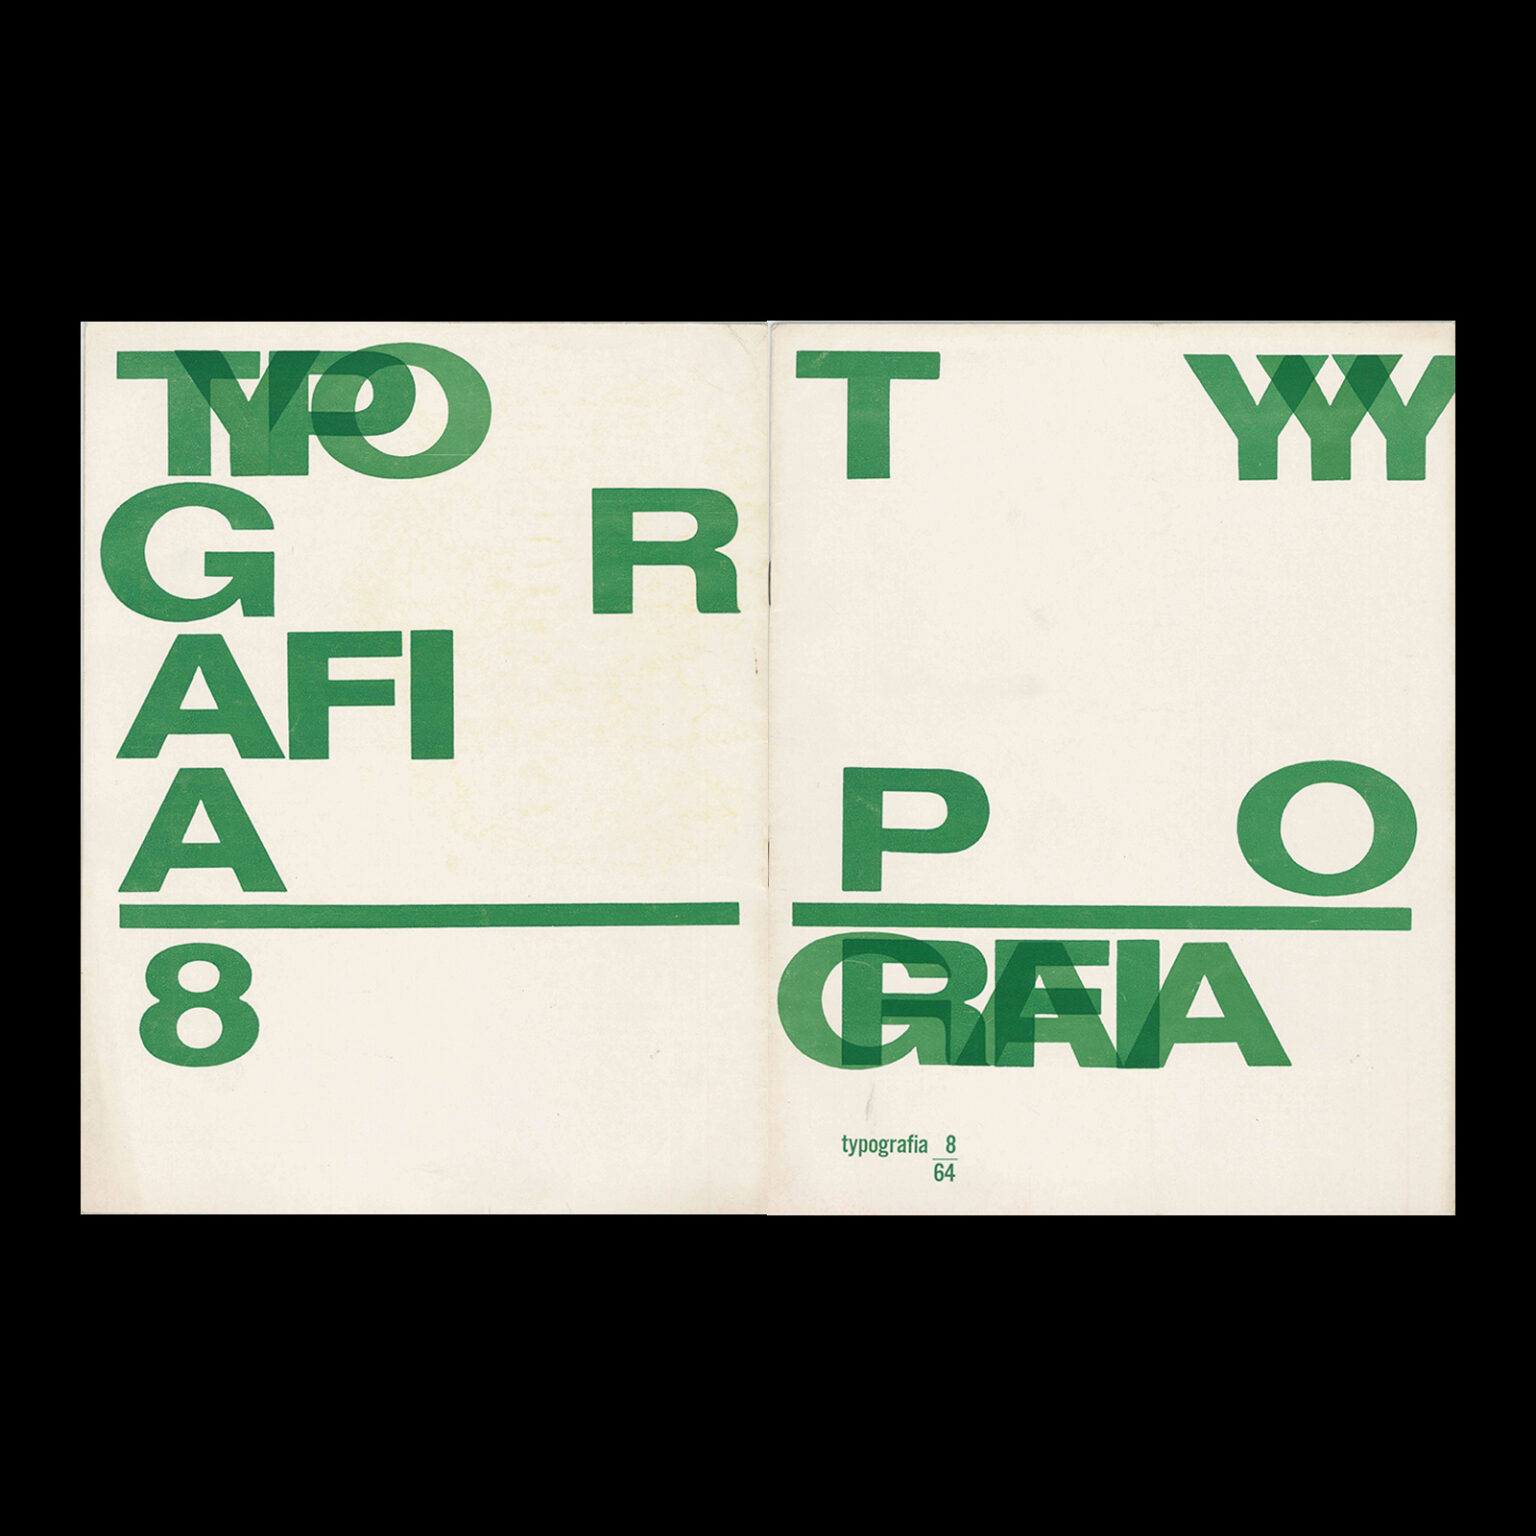 Oldřich Hlavsa and his design for Typografia magazine - Design Reviewed